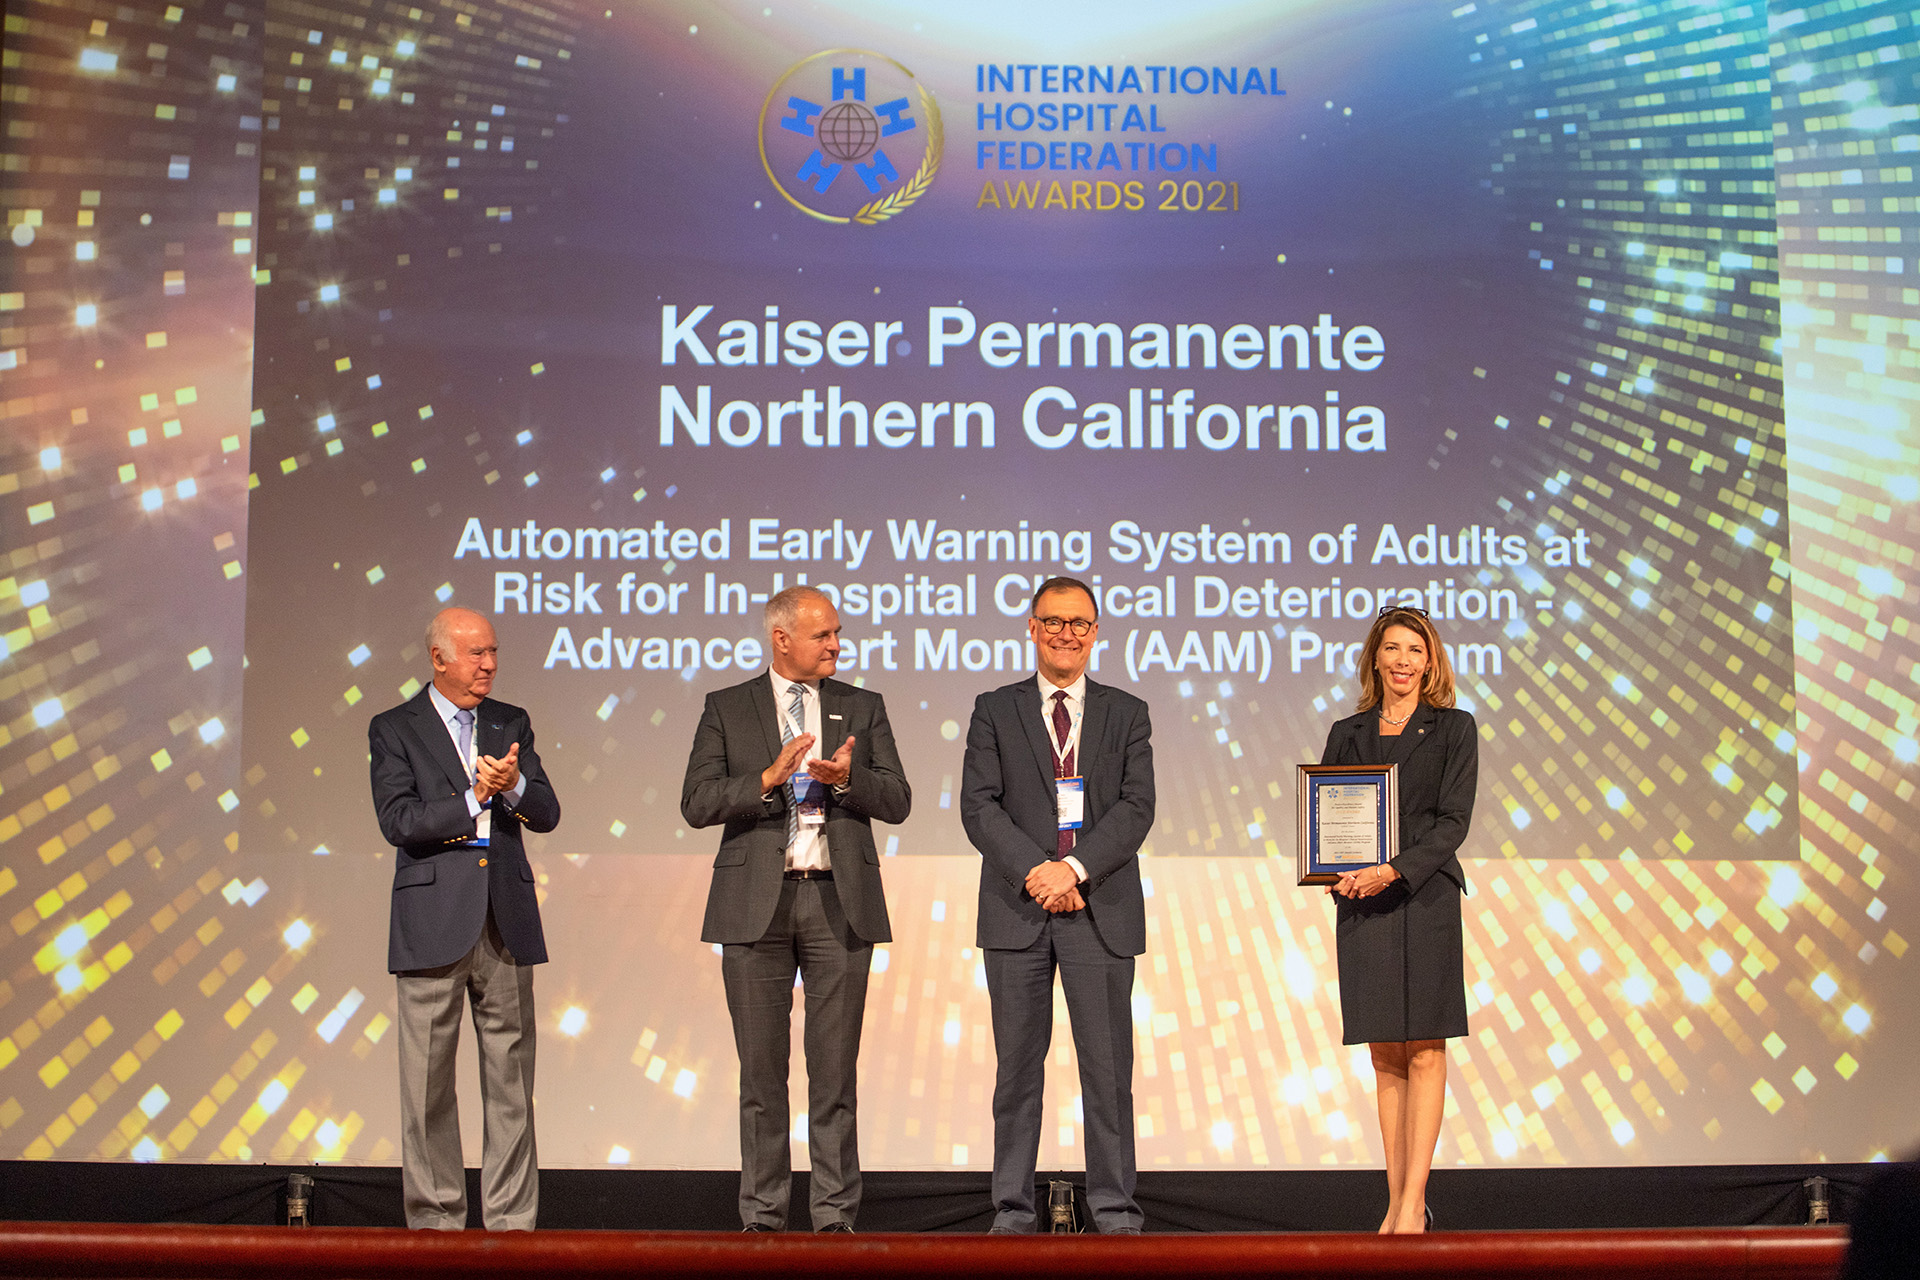 Life-saving Kaiser Permanente patient alert system garners international award